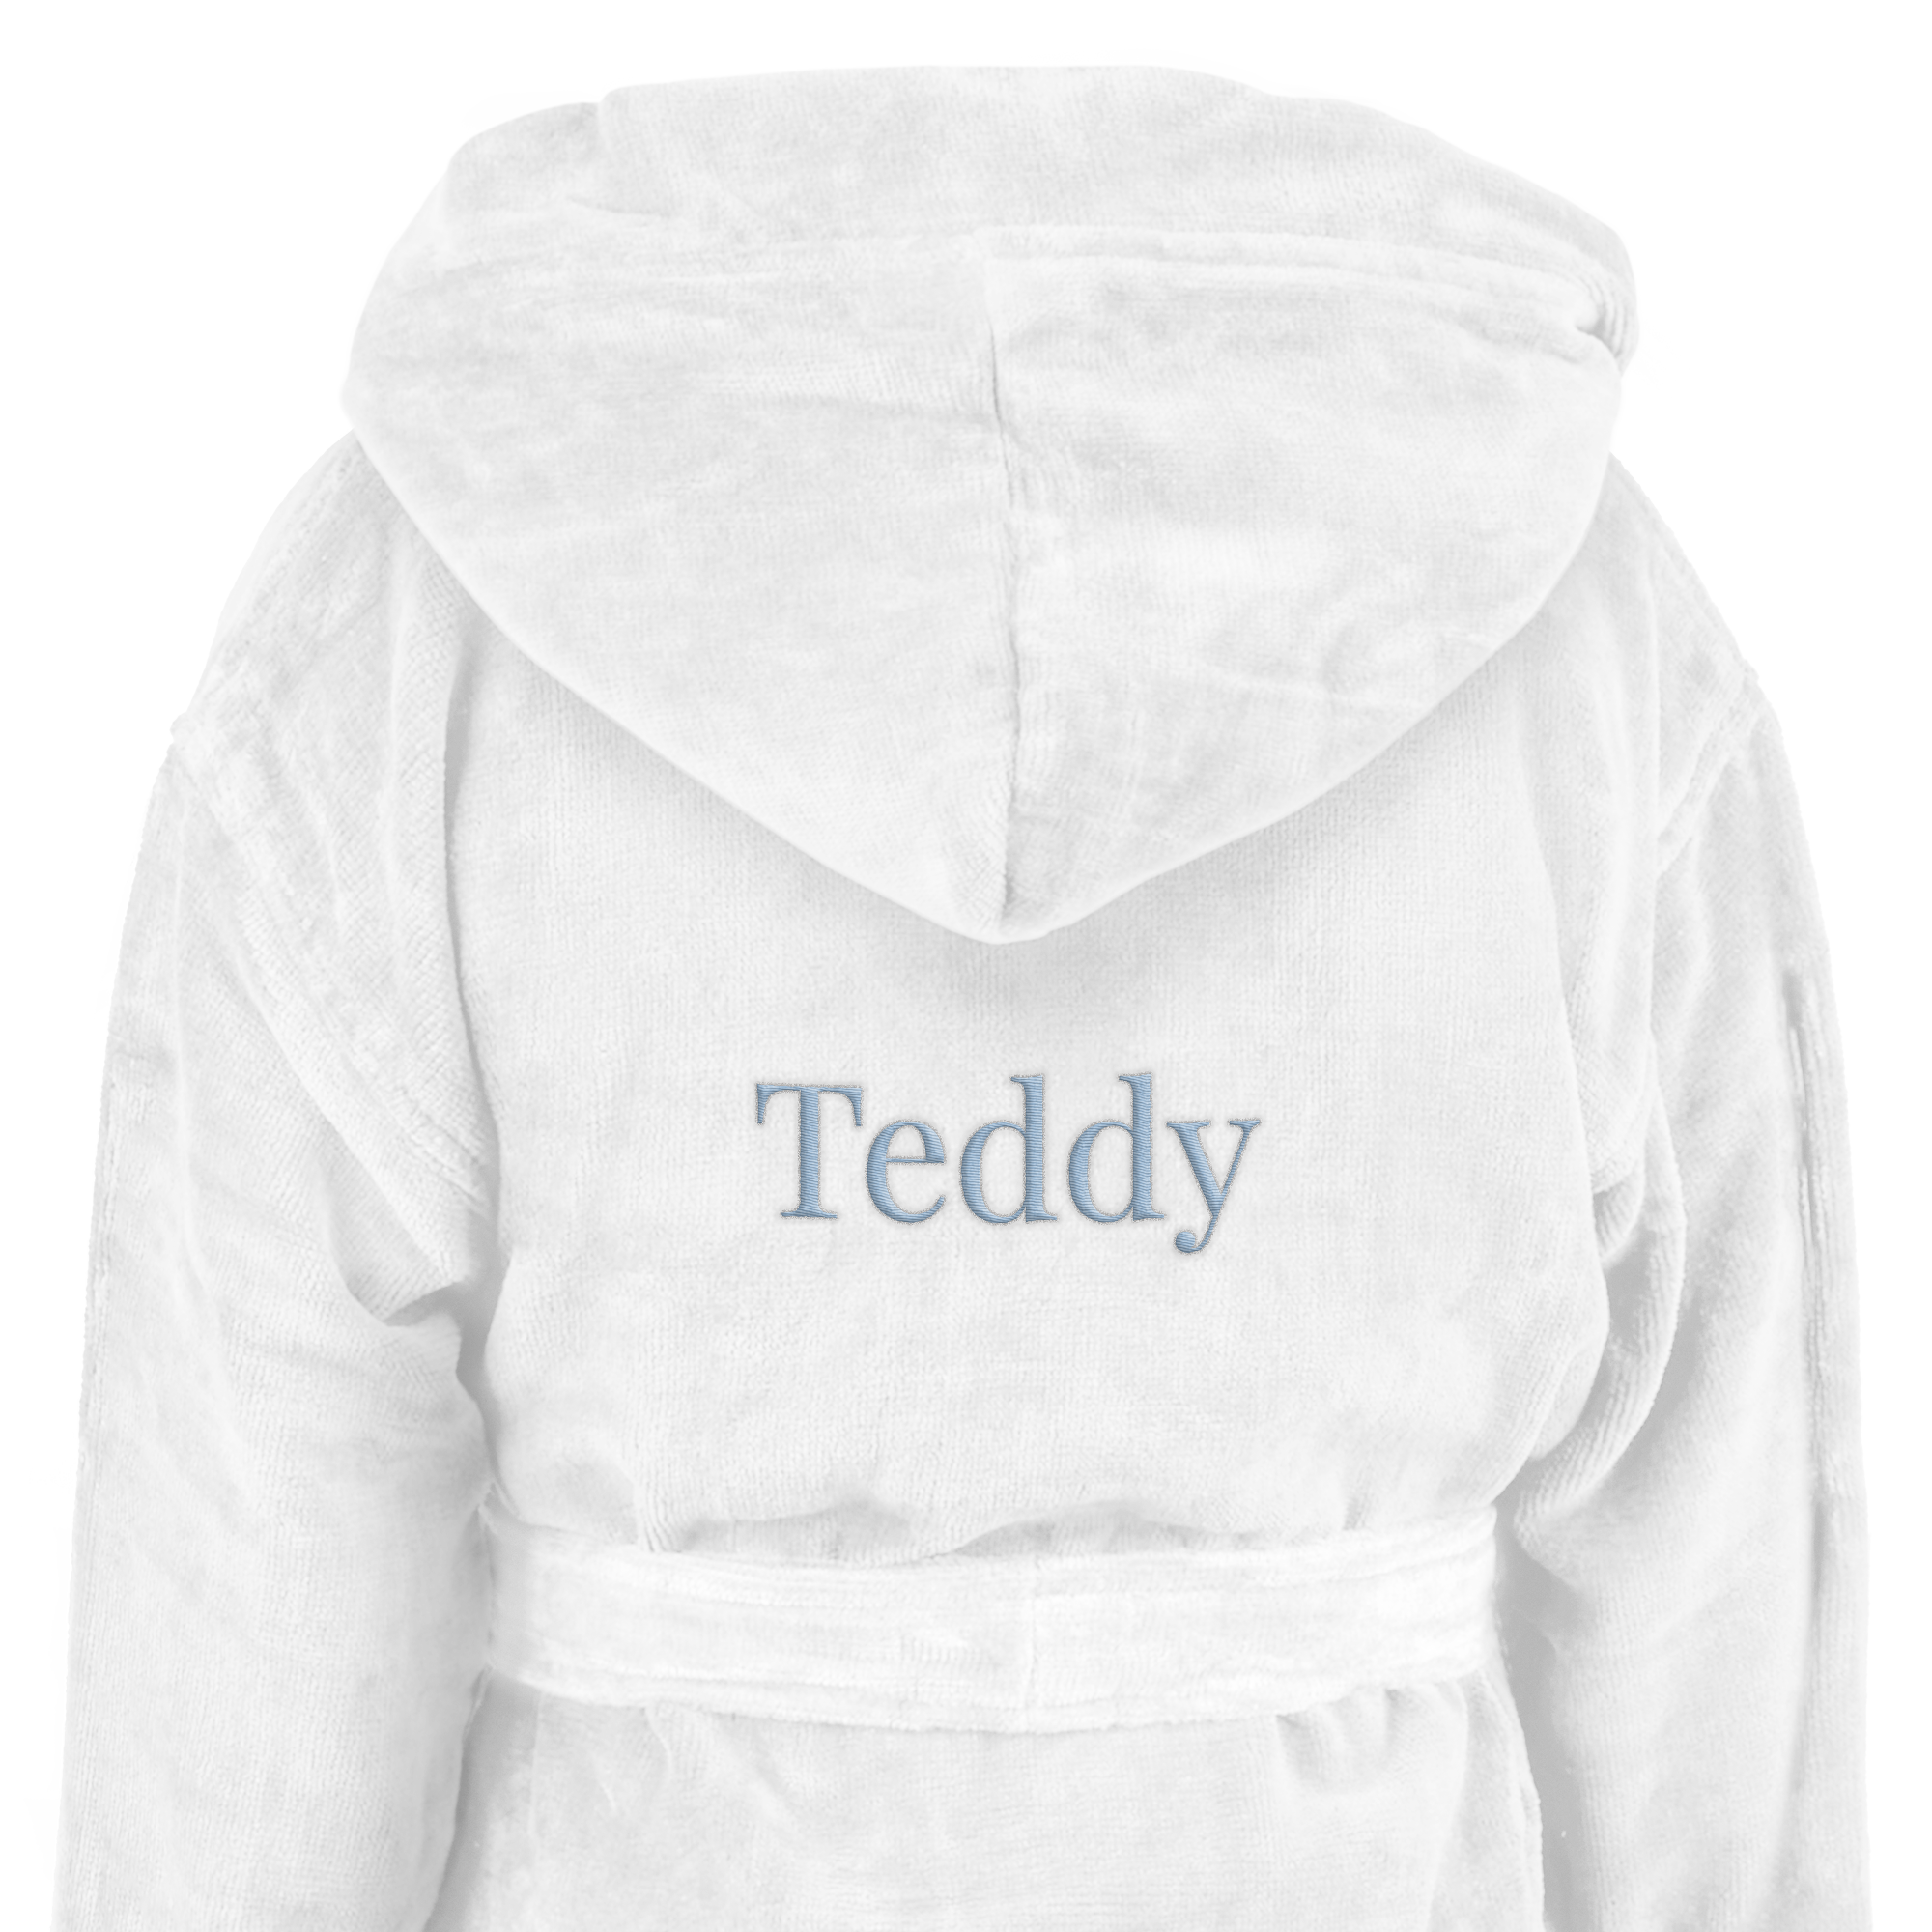 Personalised kids bathrobe - White - 4-6 yrs